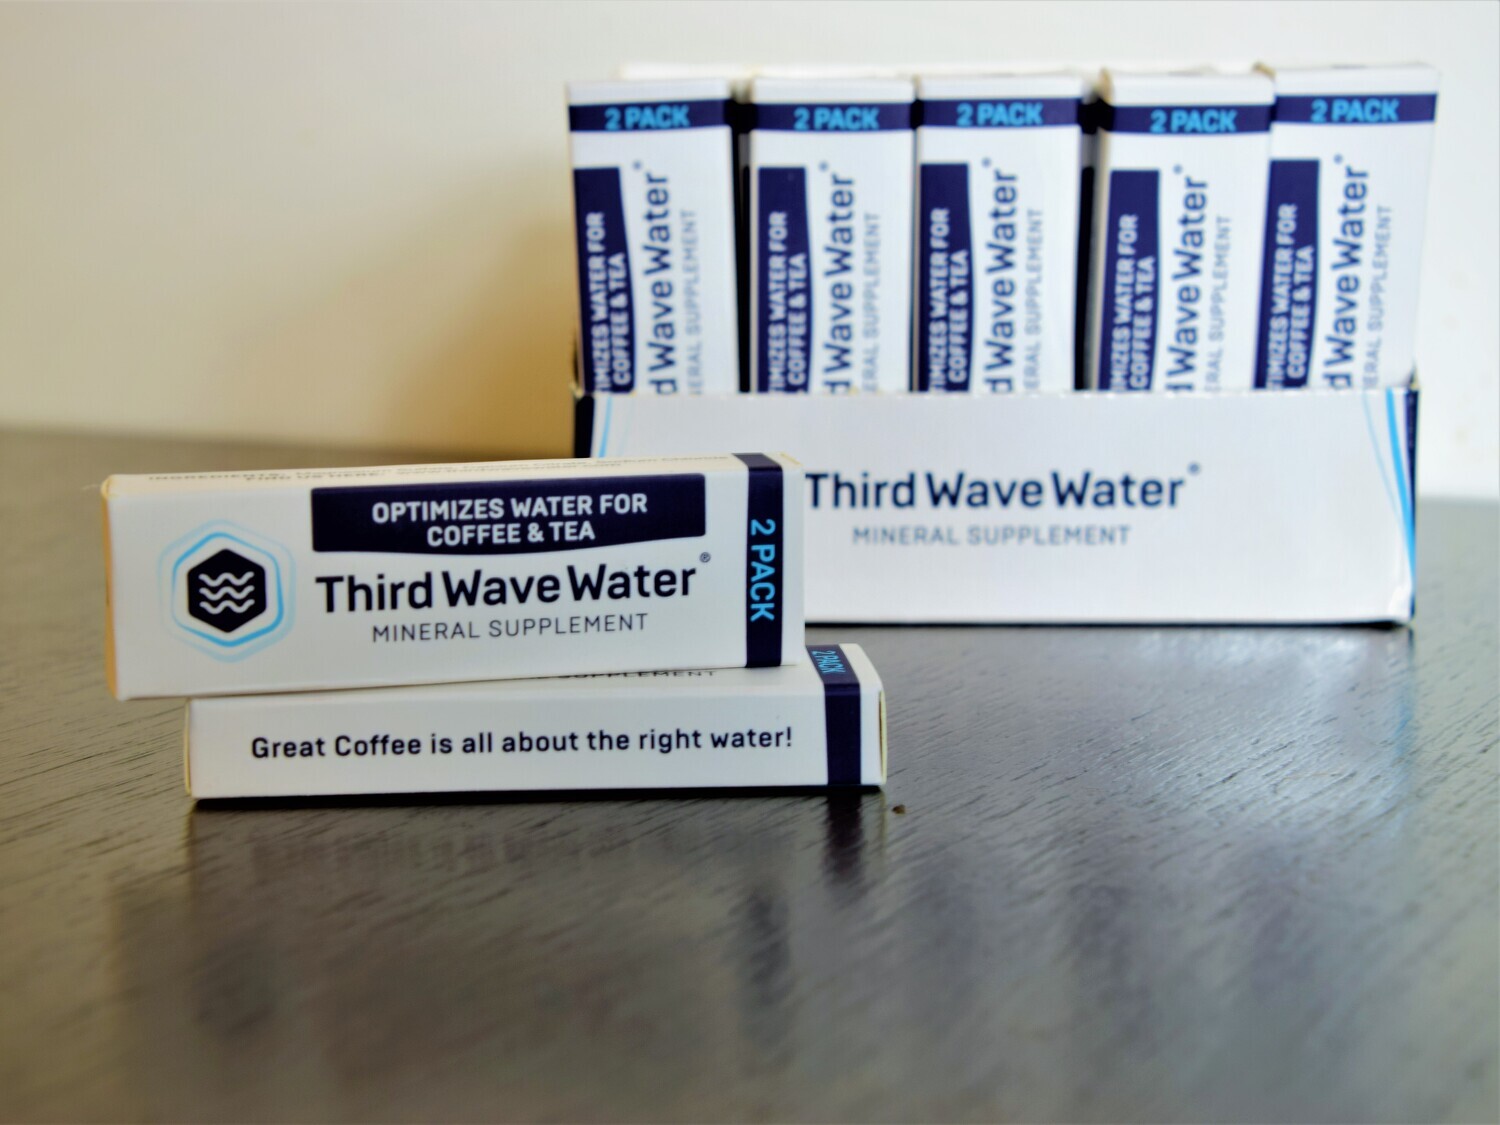 Third Wave Water 2-Pack Box